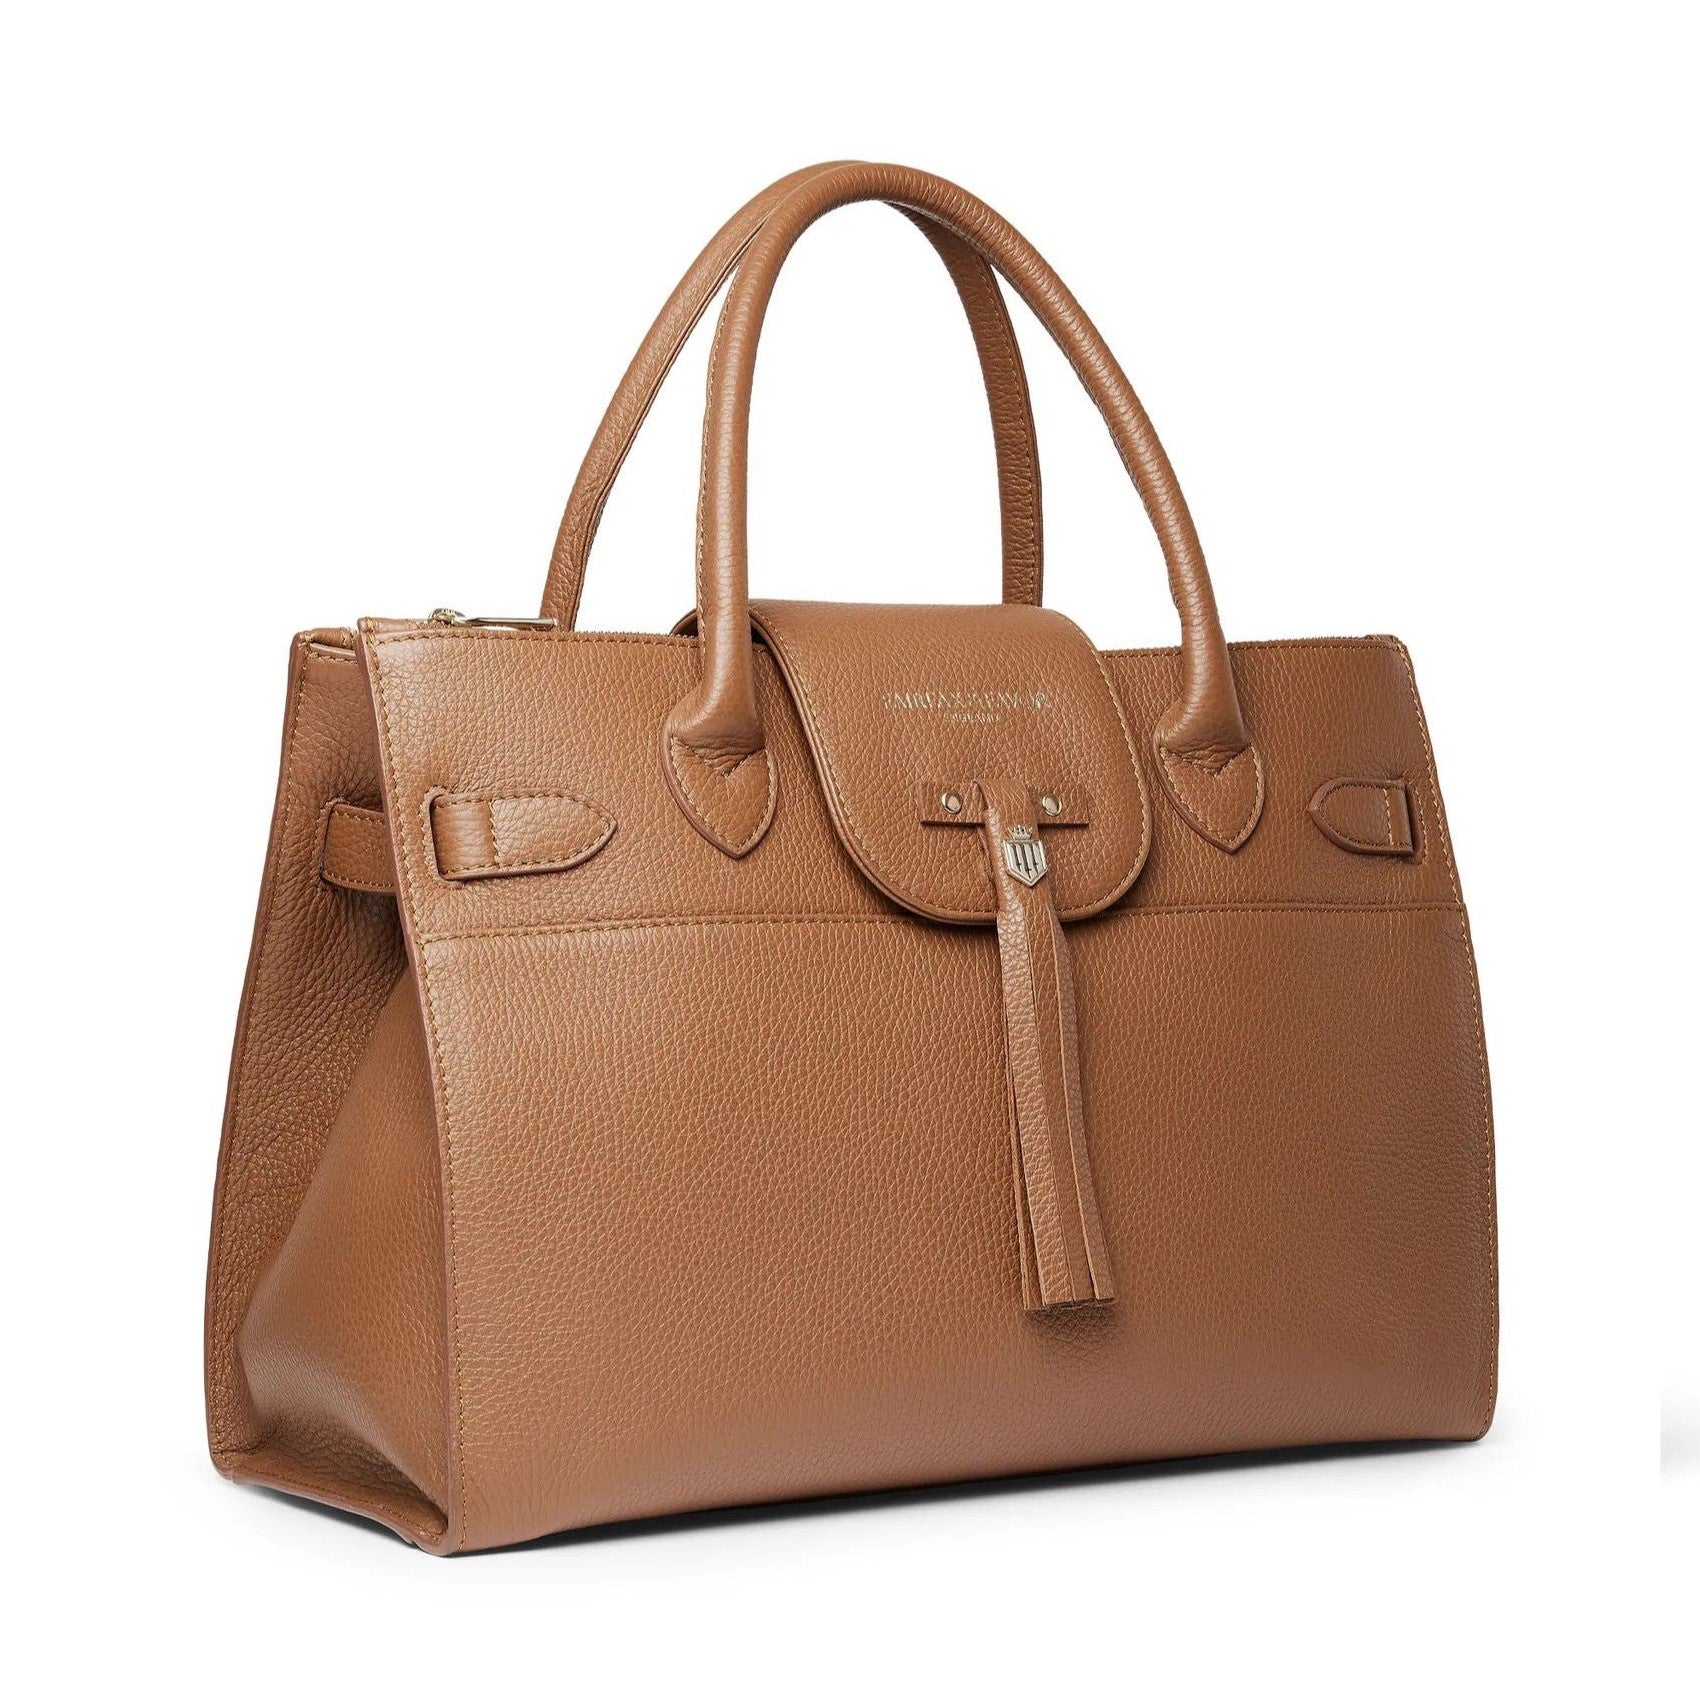 Fairfax & Favor Large Windsor Ladies Bag - Tan Leather